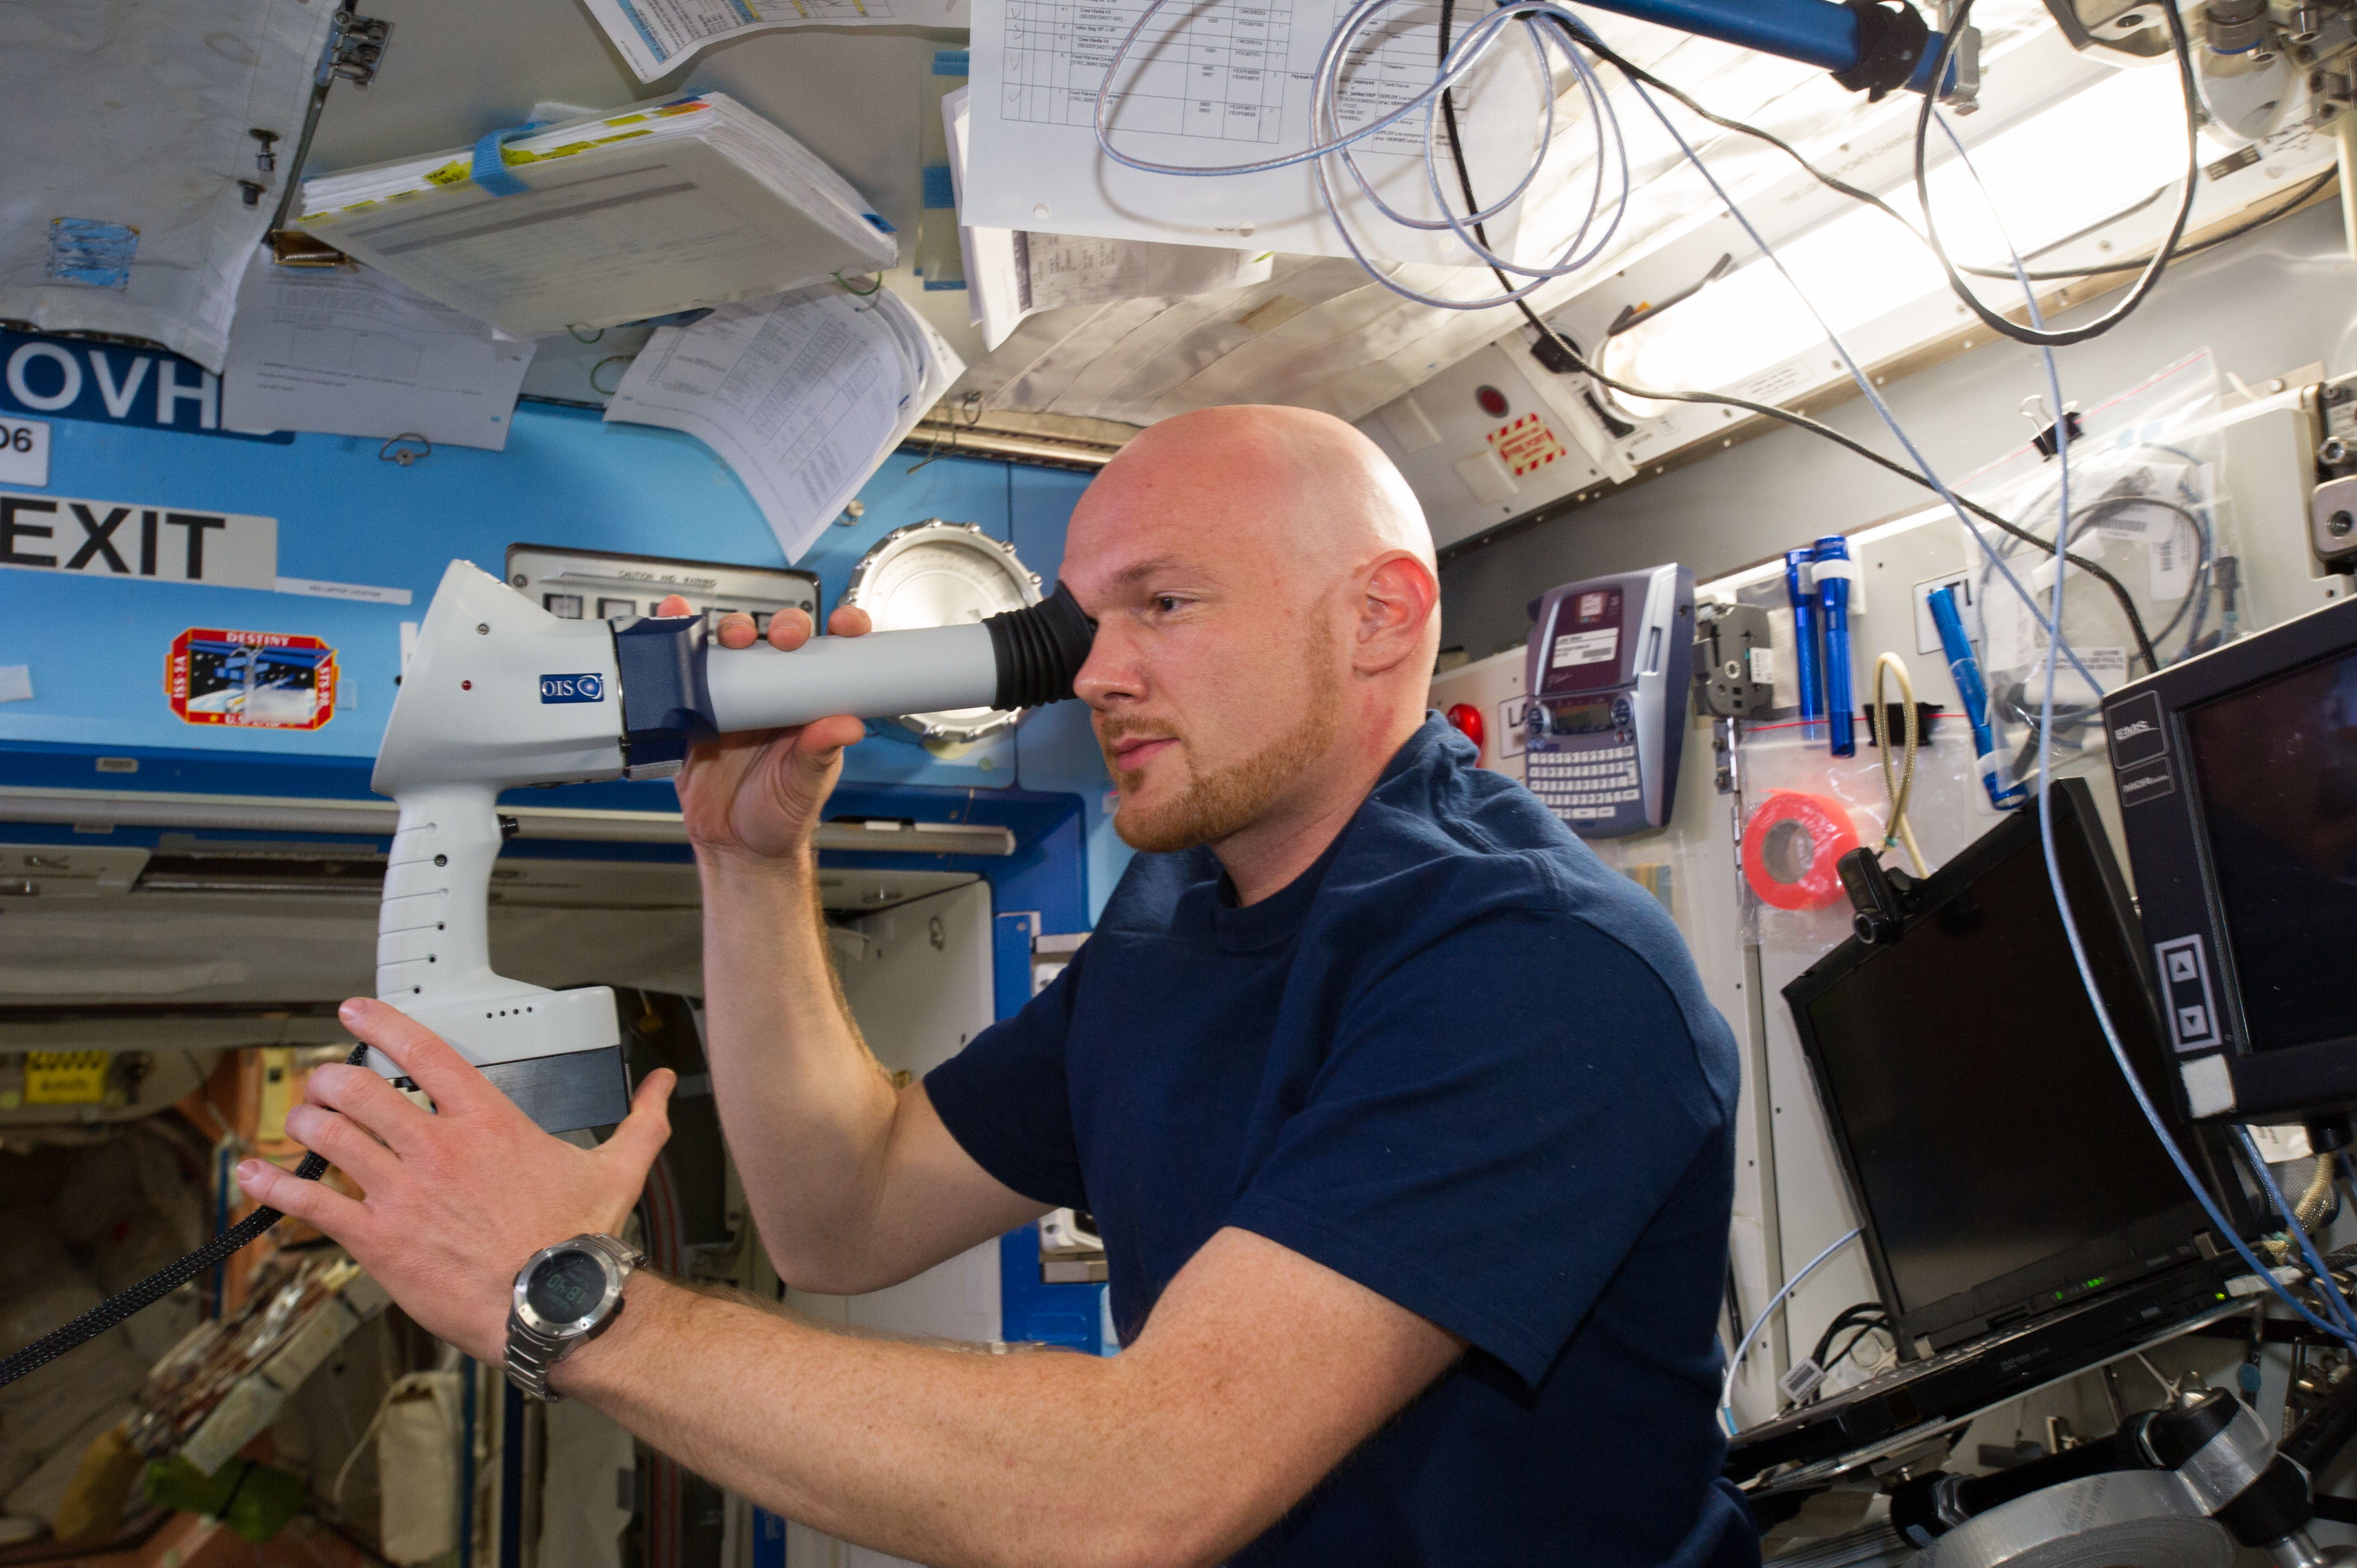 astronaut Alexander Gerst using the fundoscope